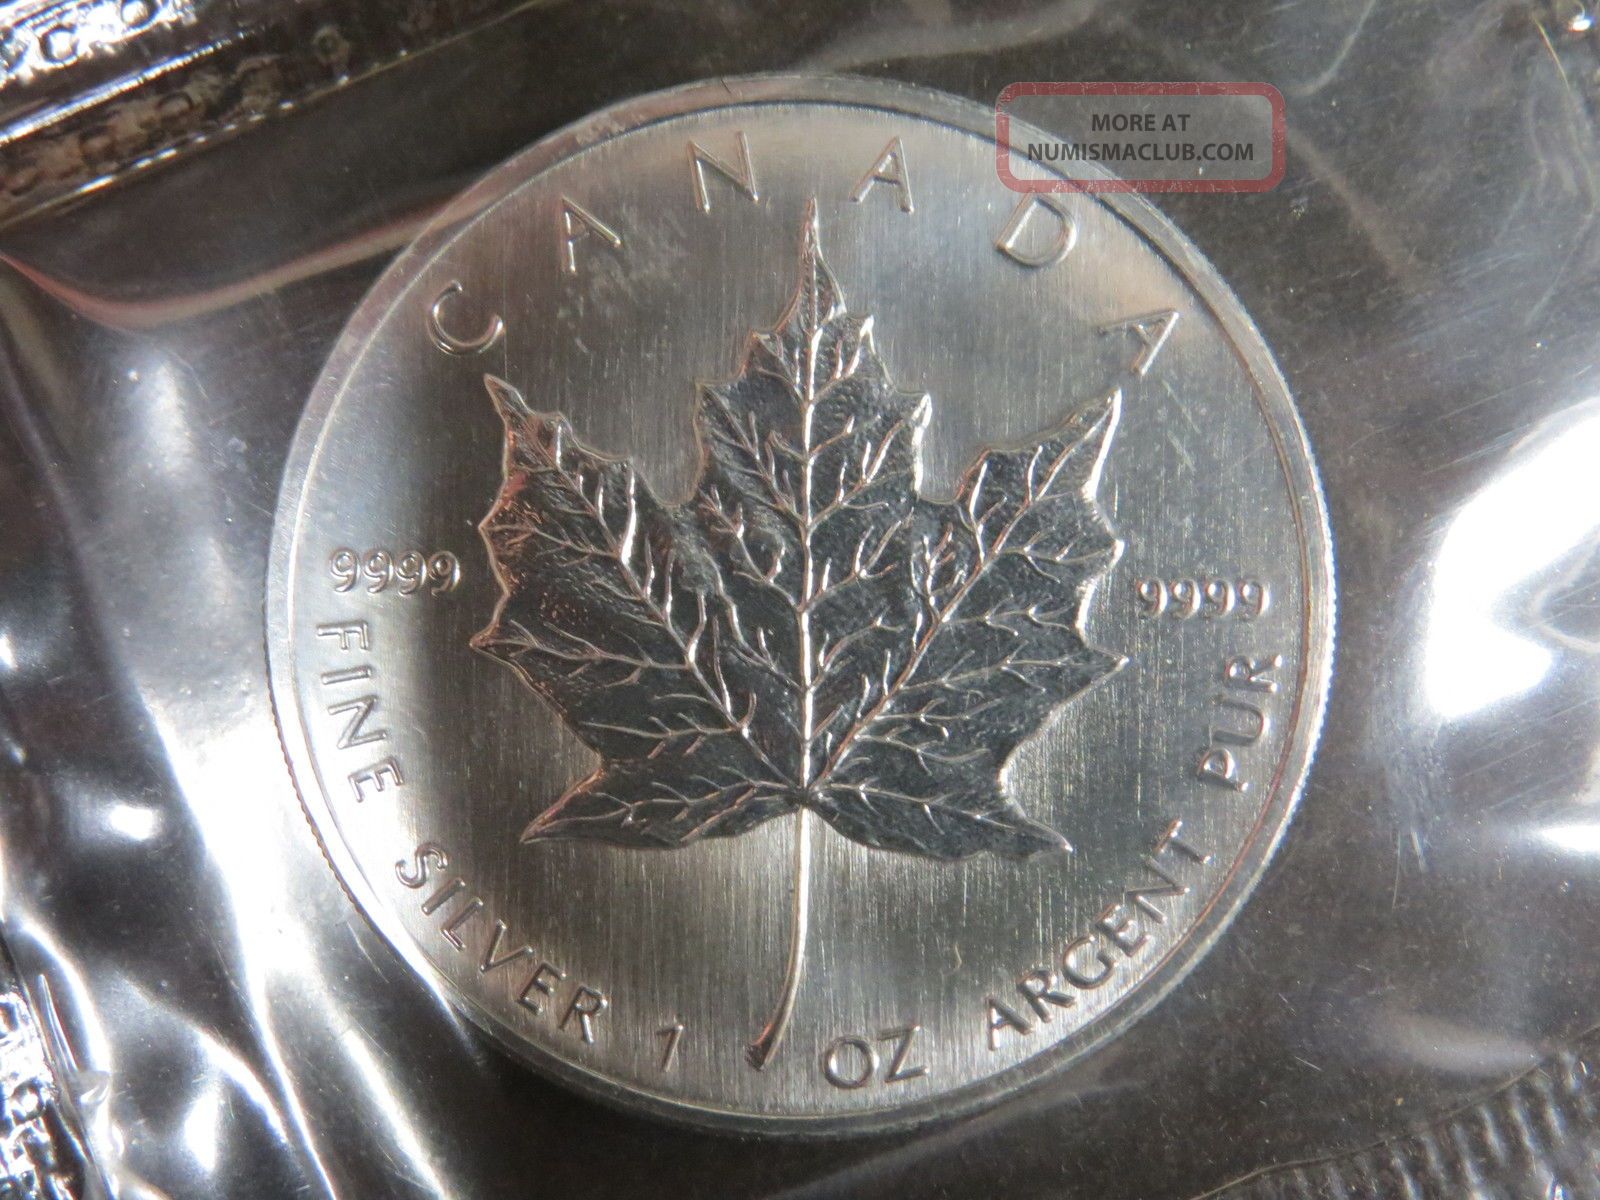 1 oz canadian silver maple leaf coin